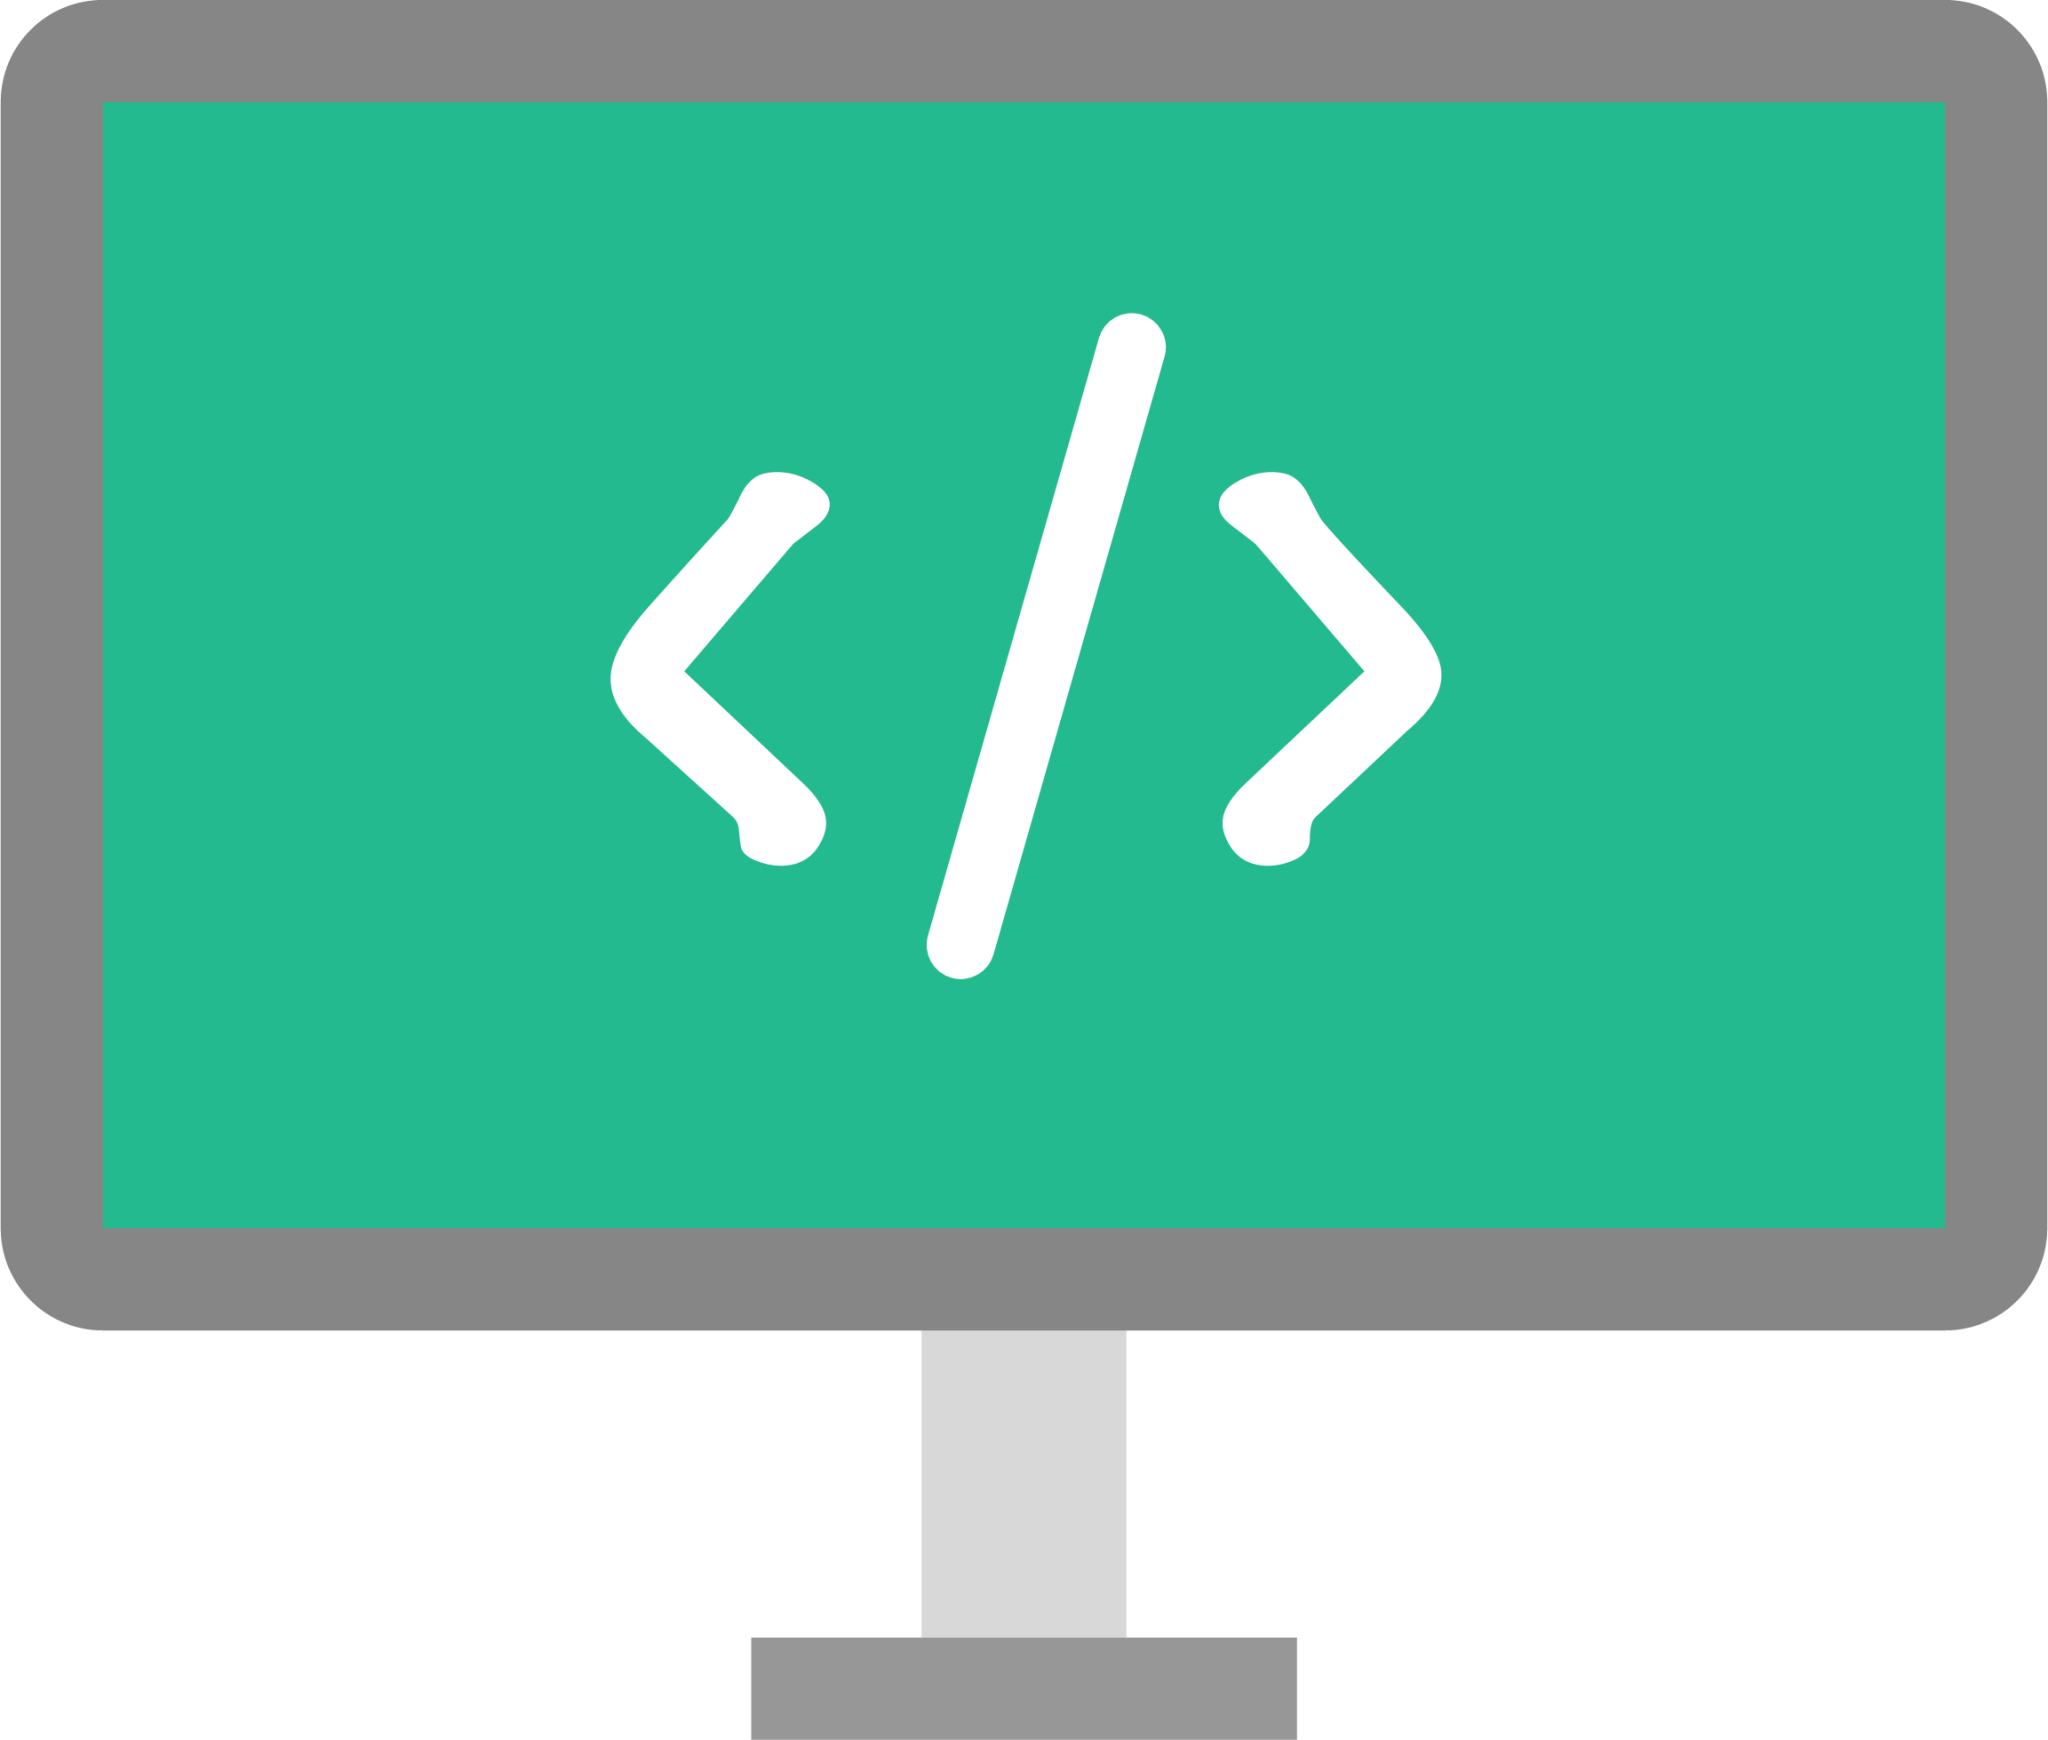 display code icon